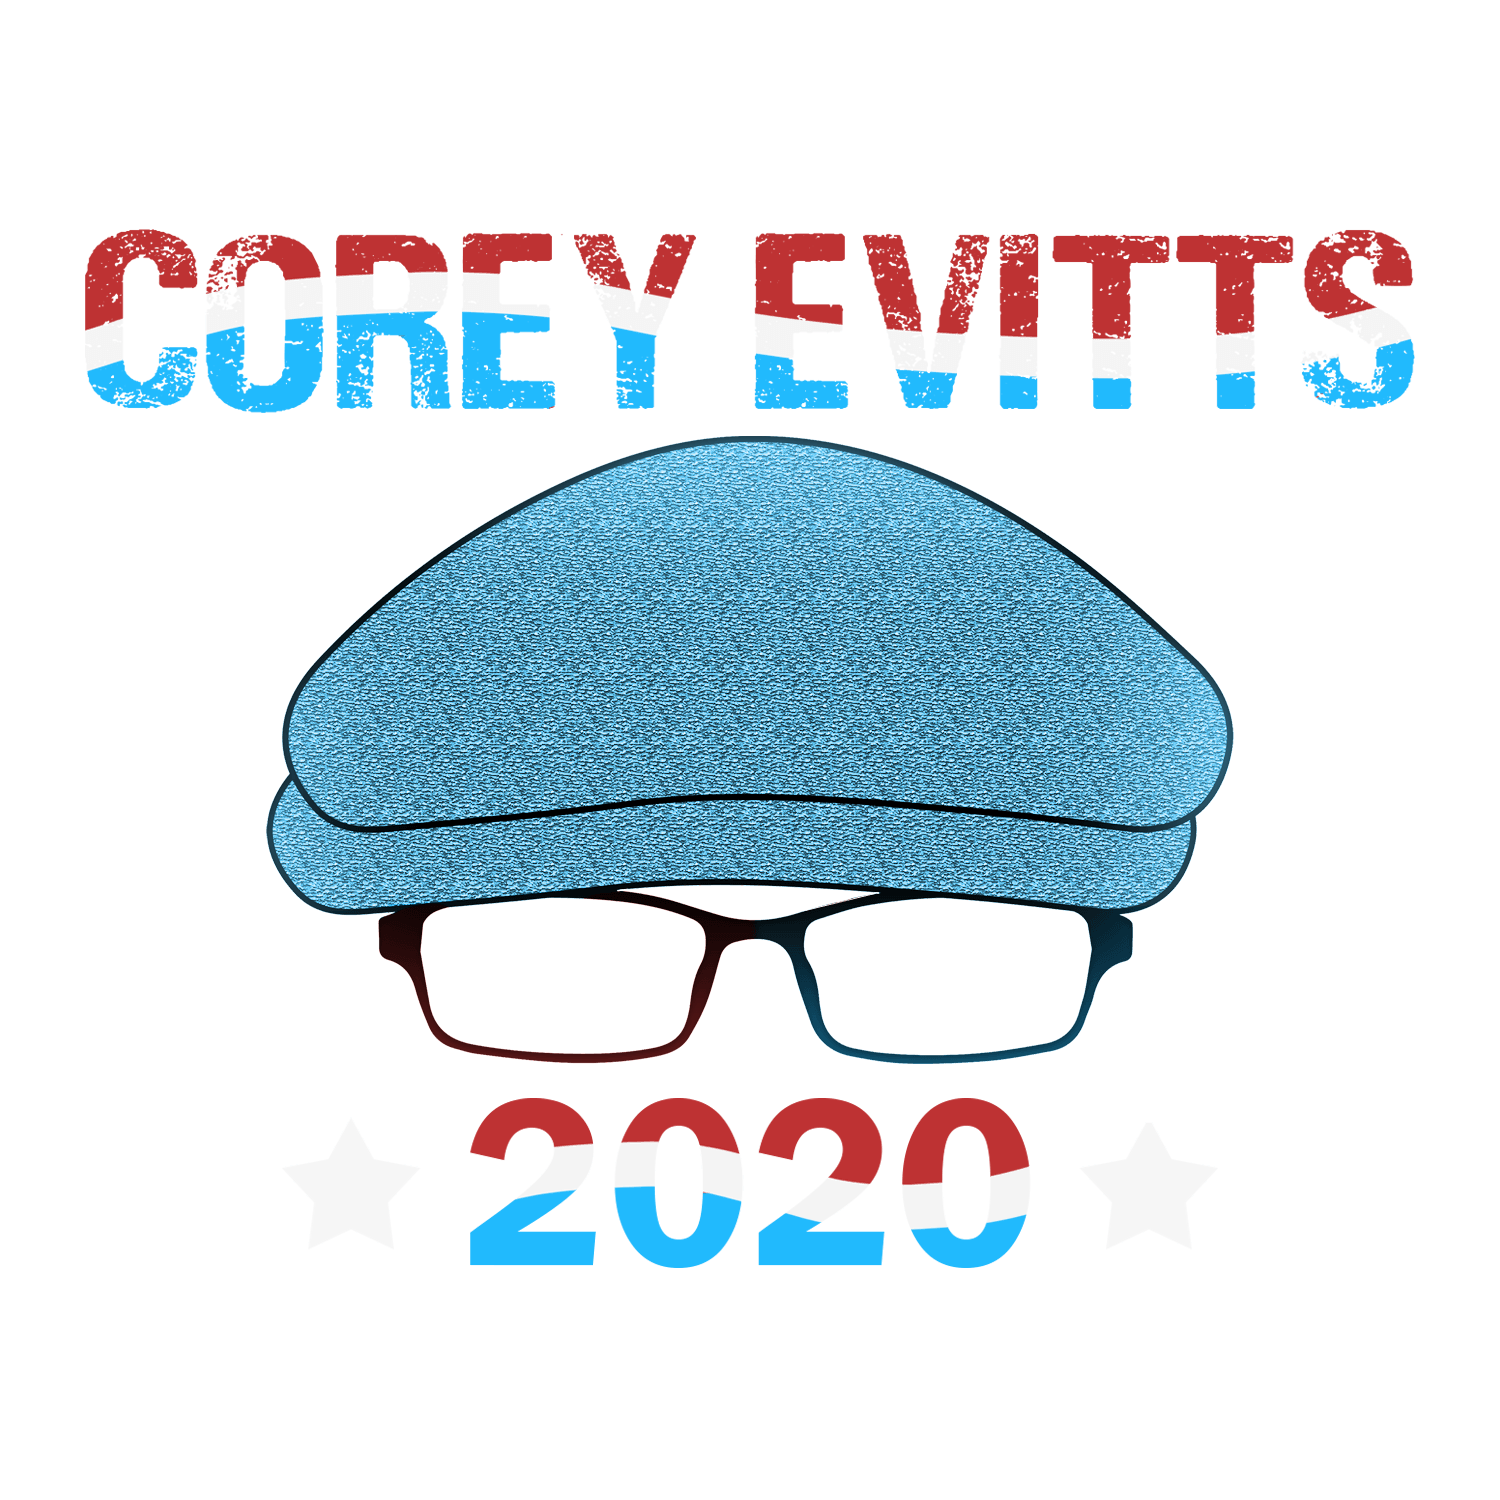 corey evitts 2020 logo